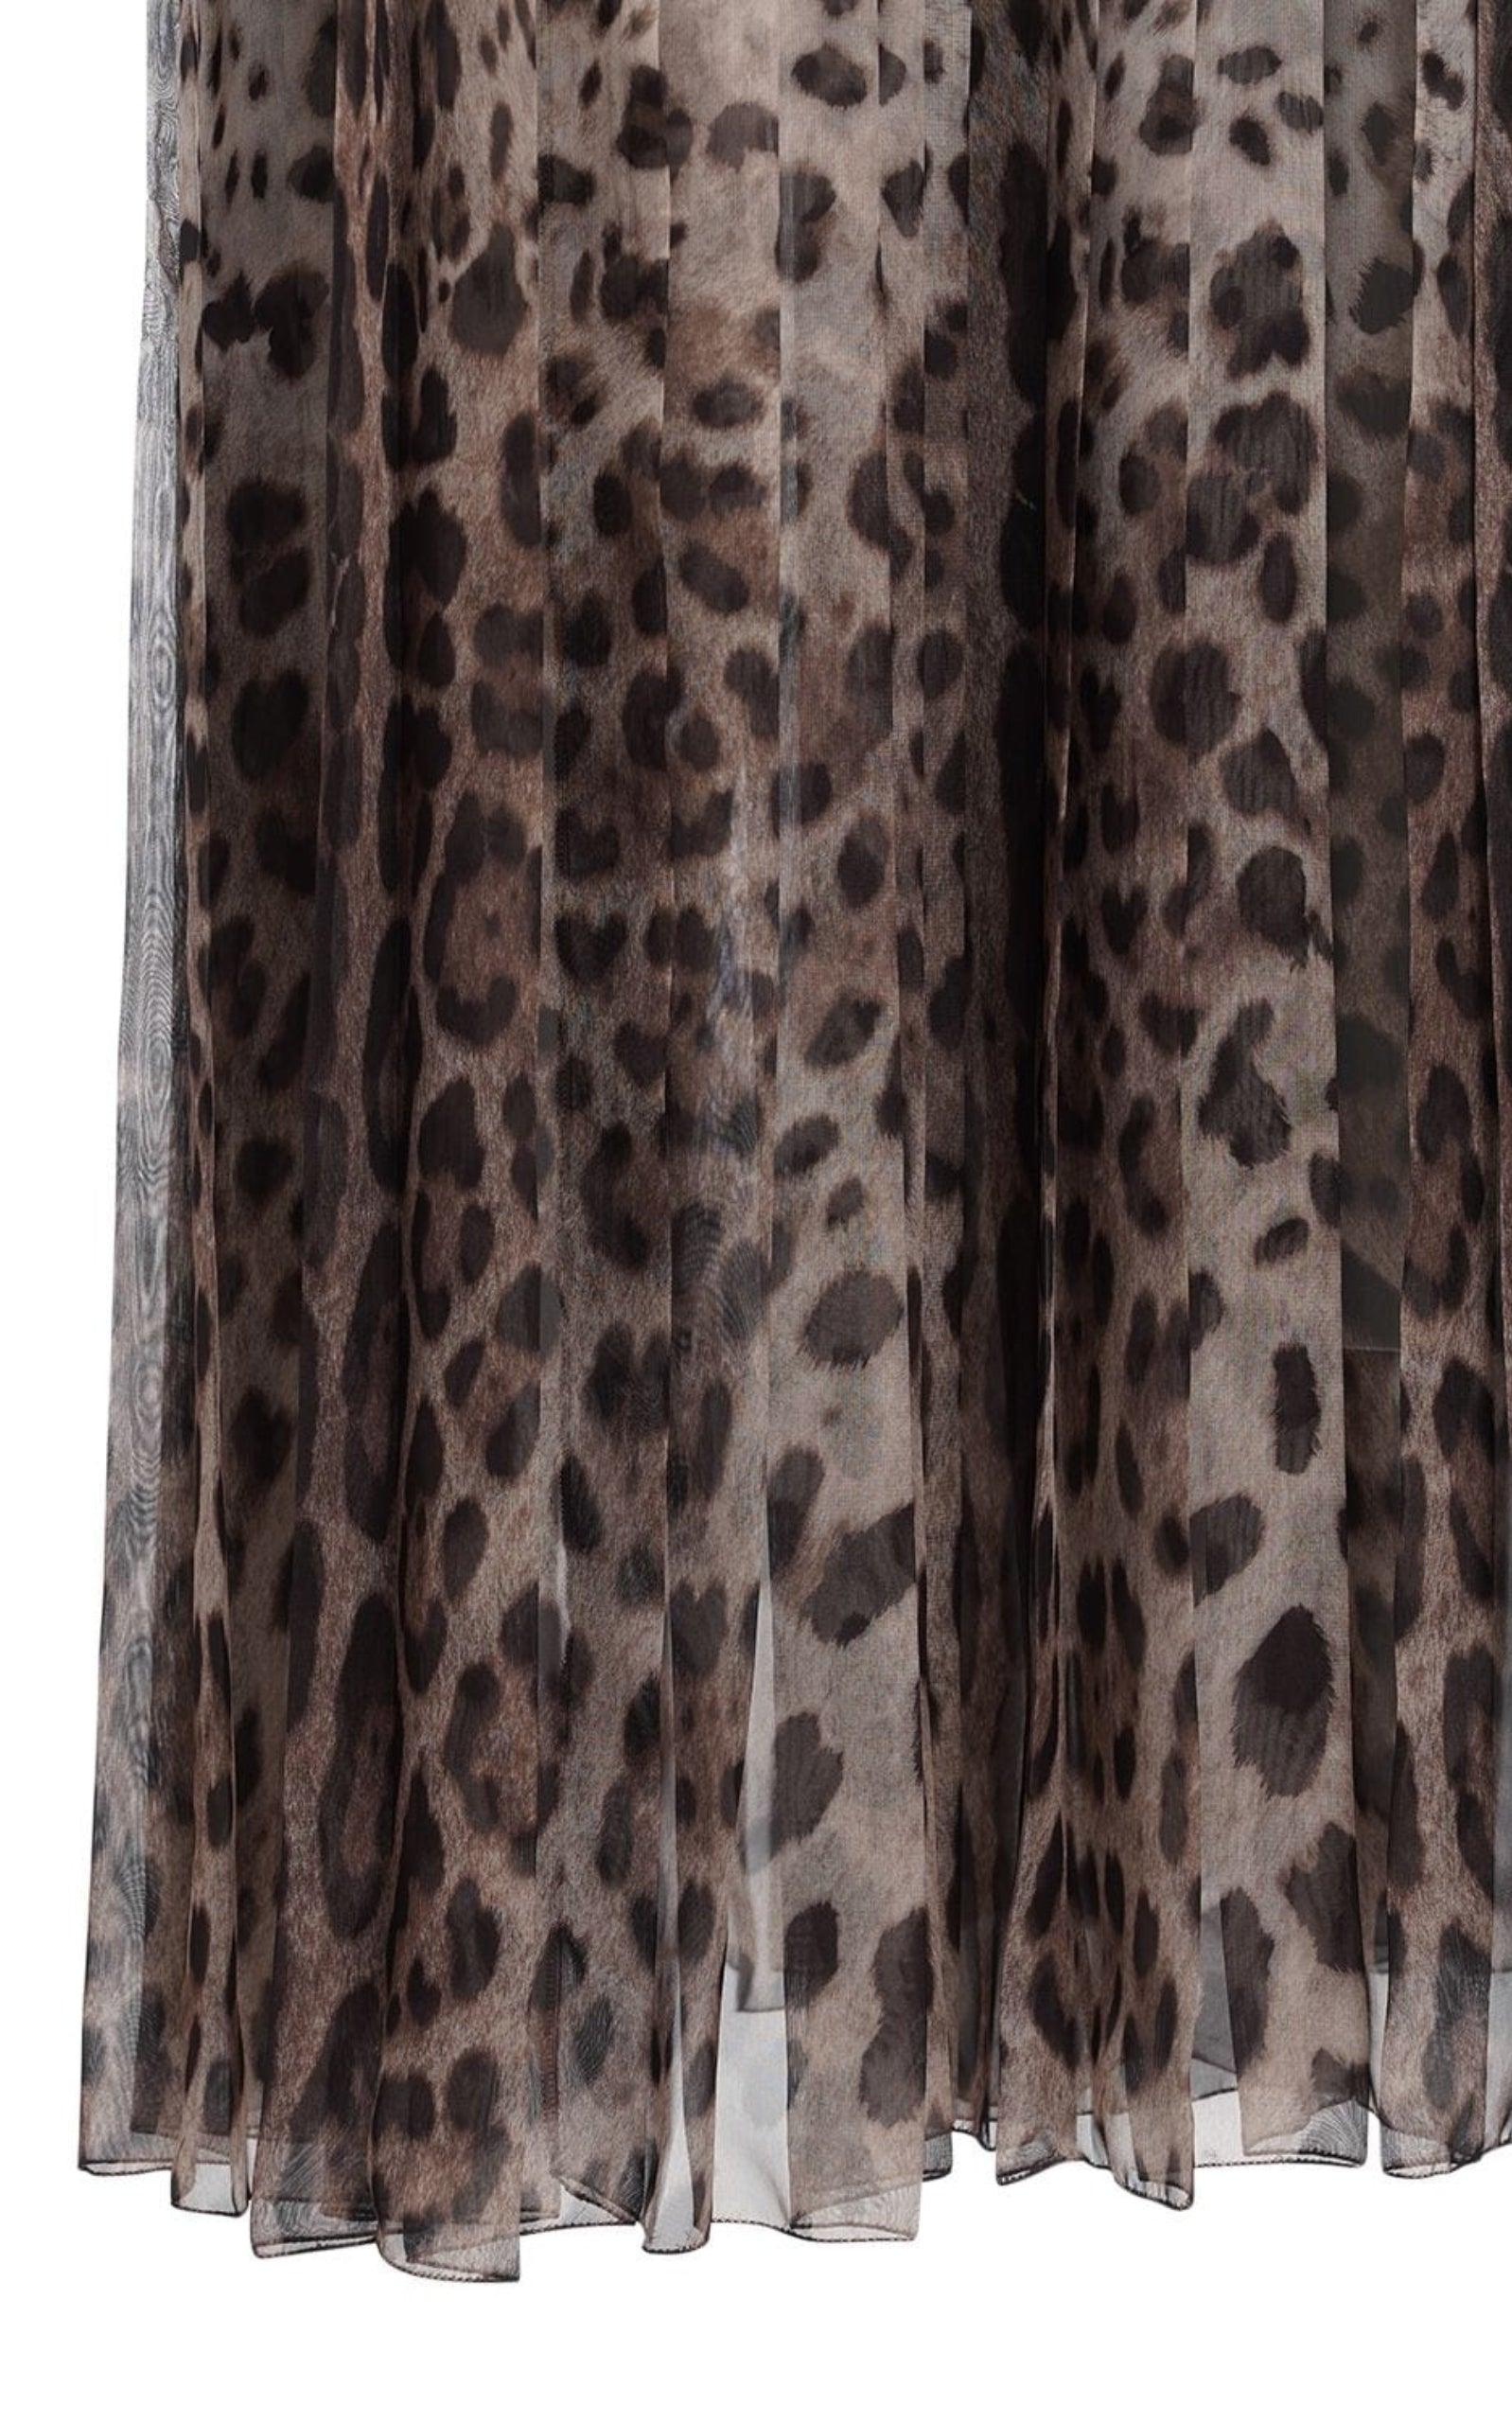  Dolce & GabbanaLeopard Print Wide Chiffon Pants - Runway Catalog